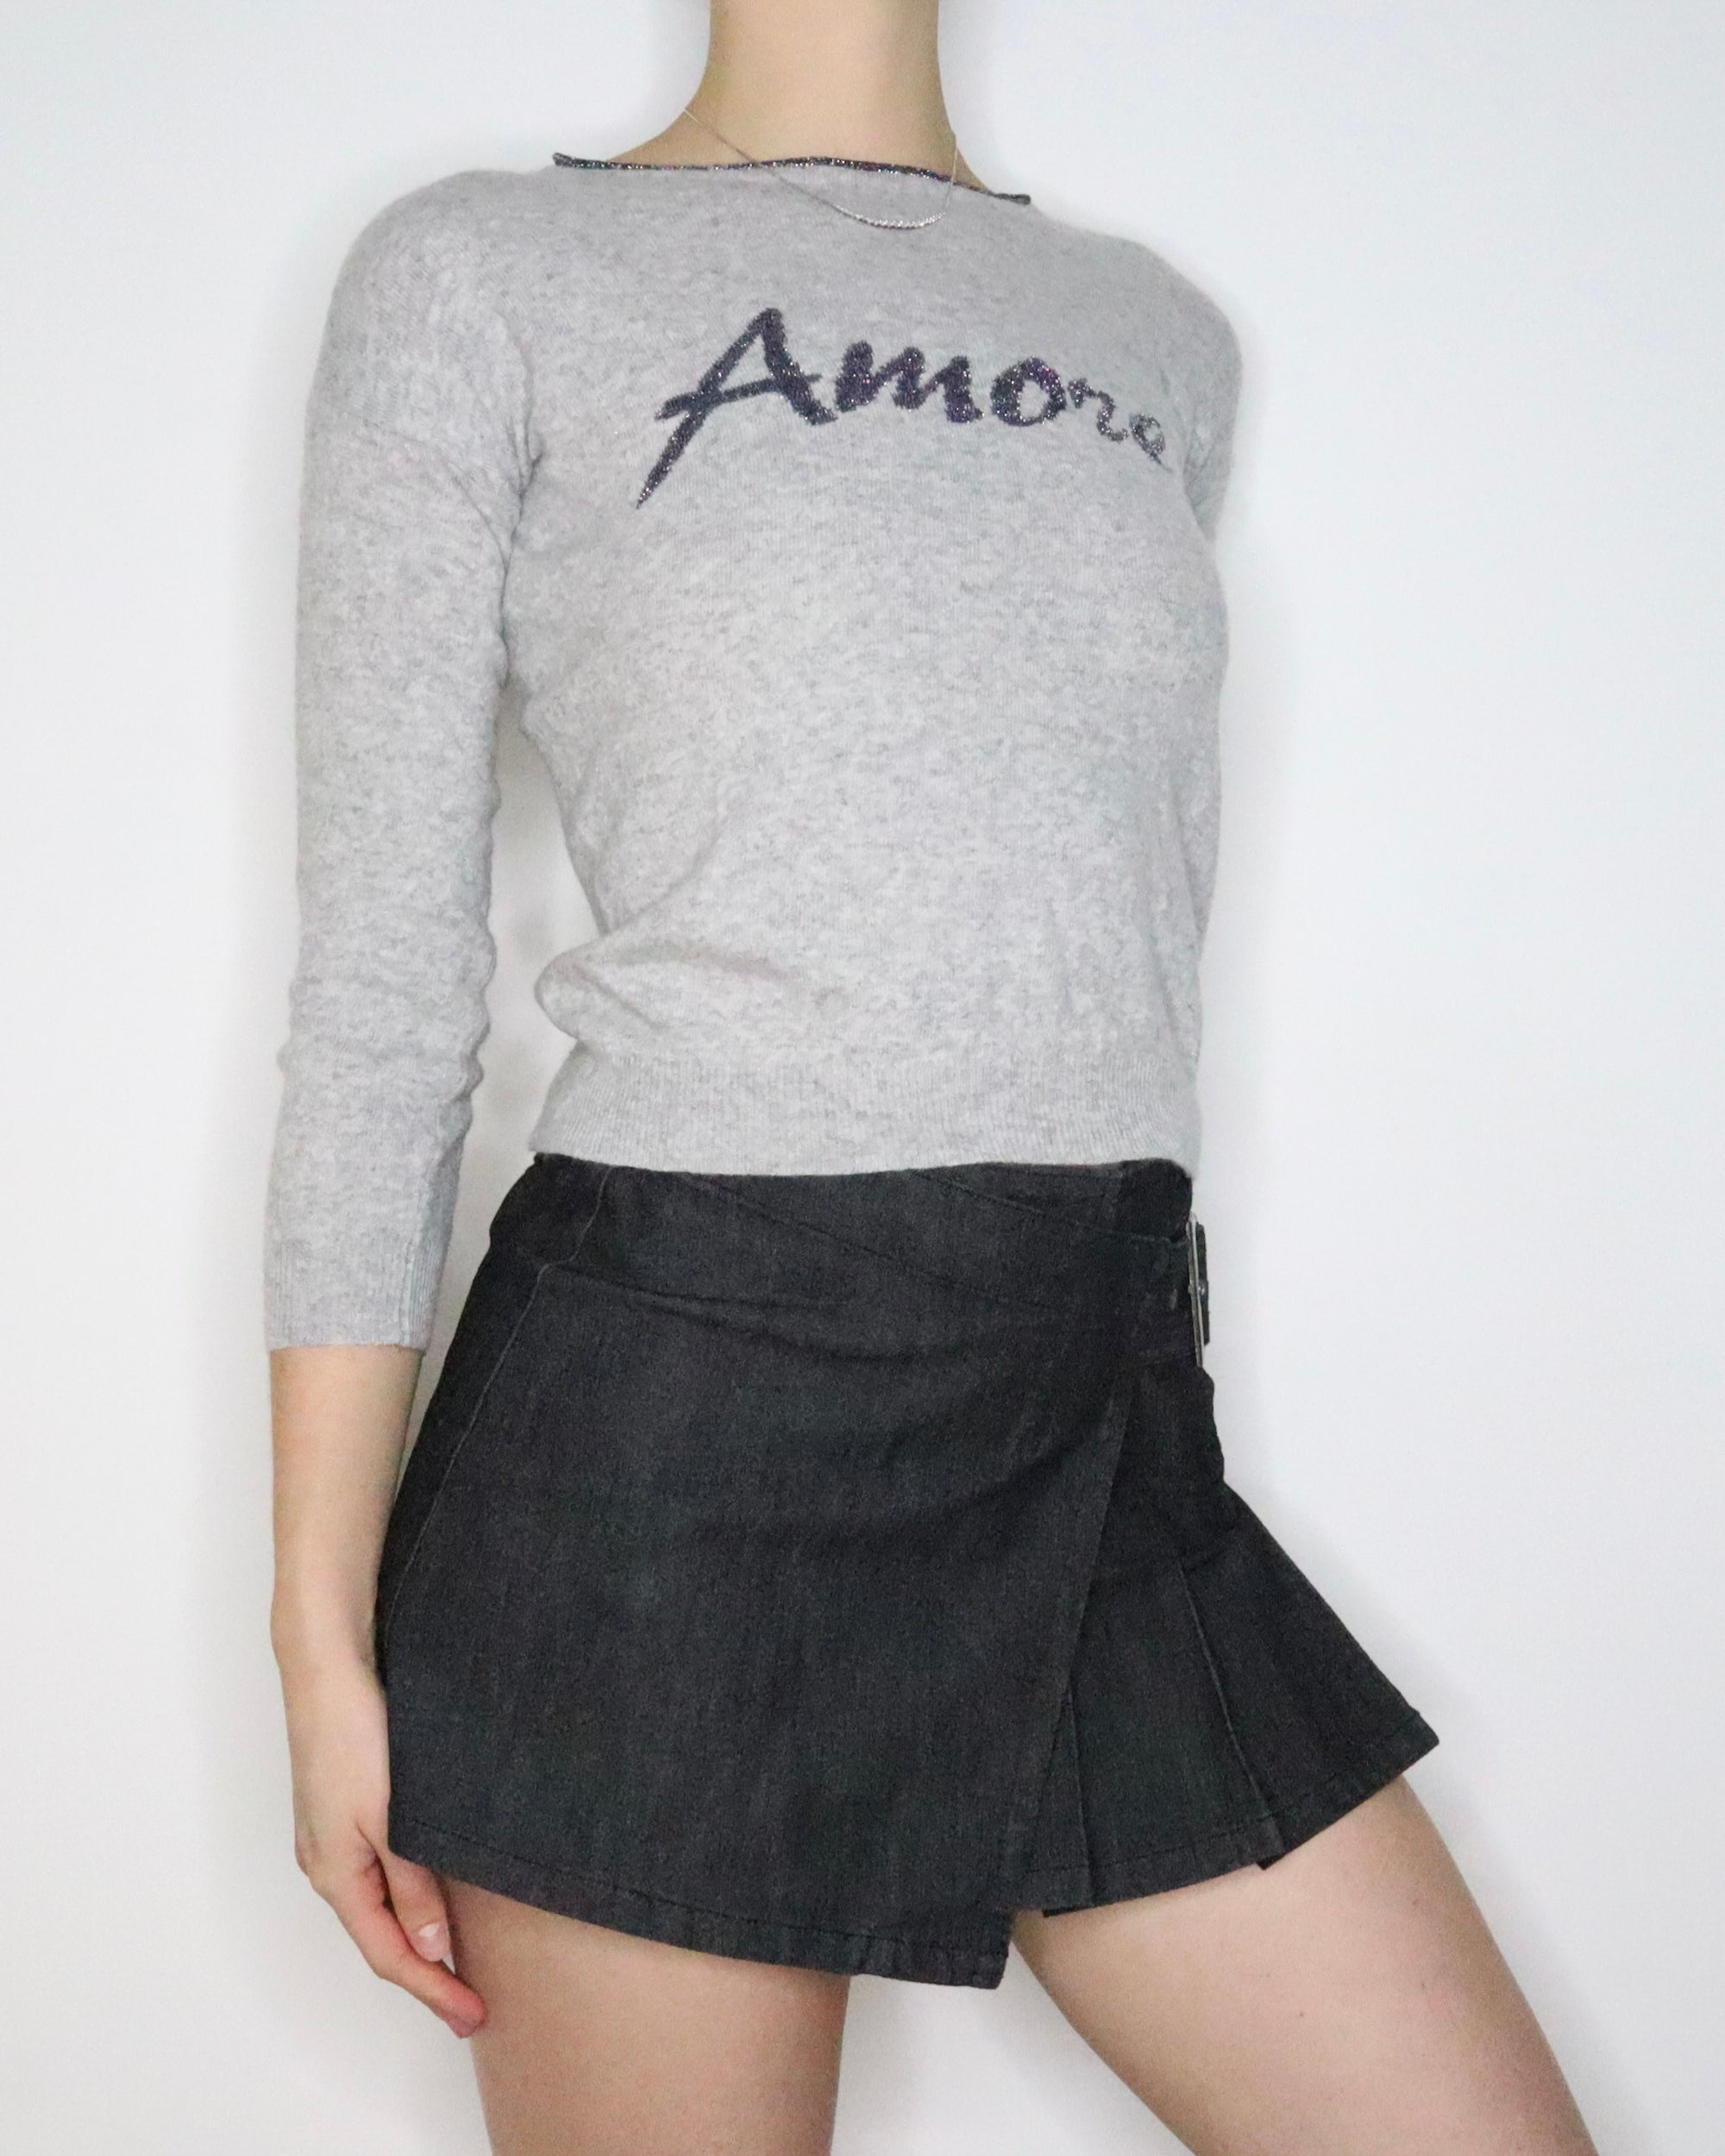 Italian Amore Sweater (Small) 